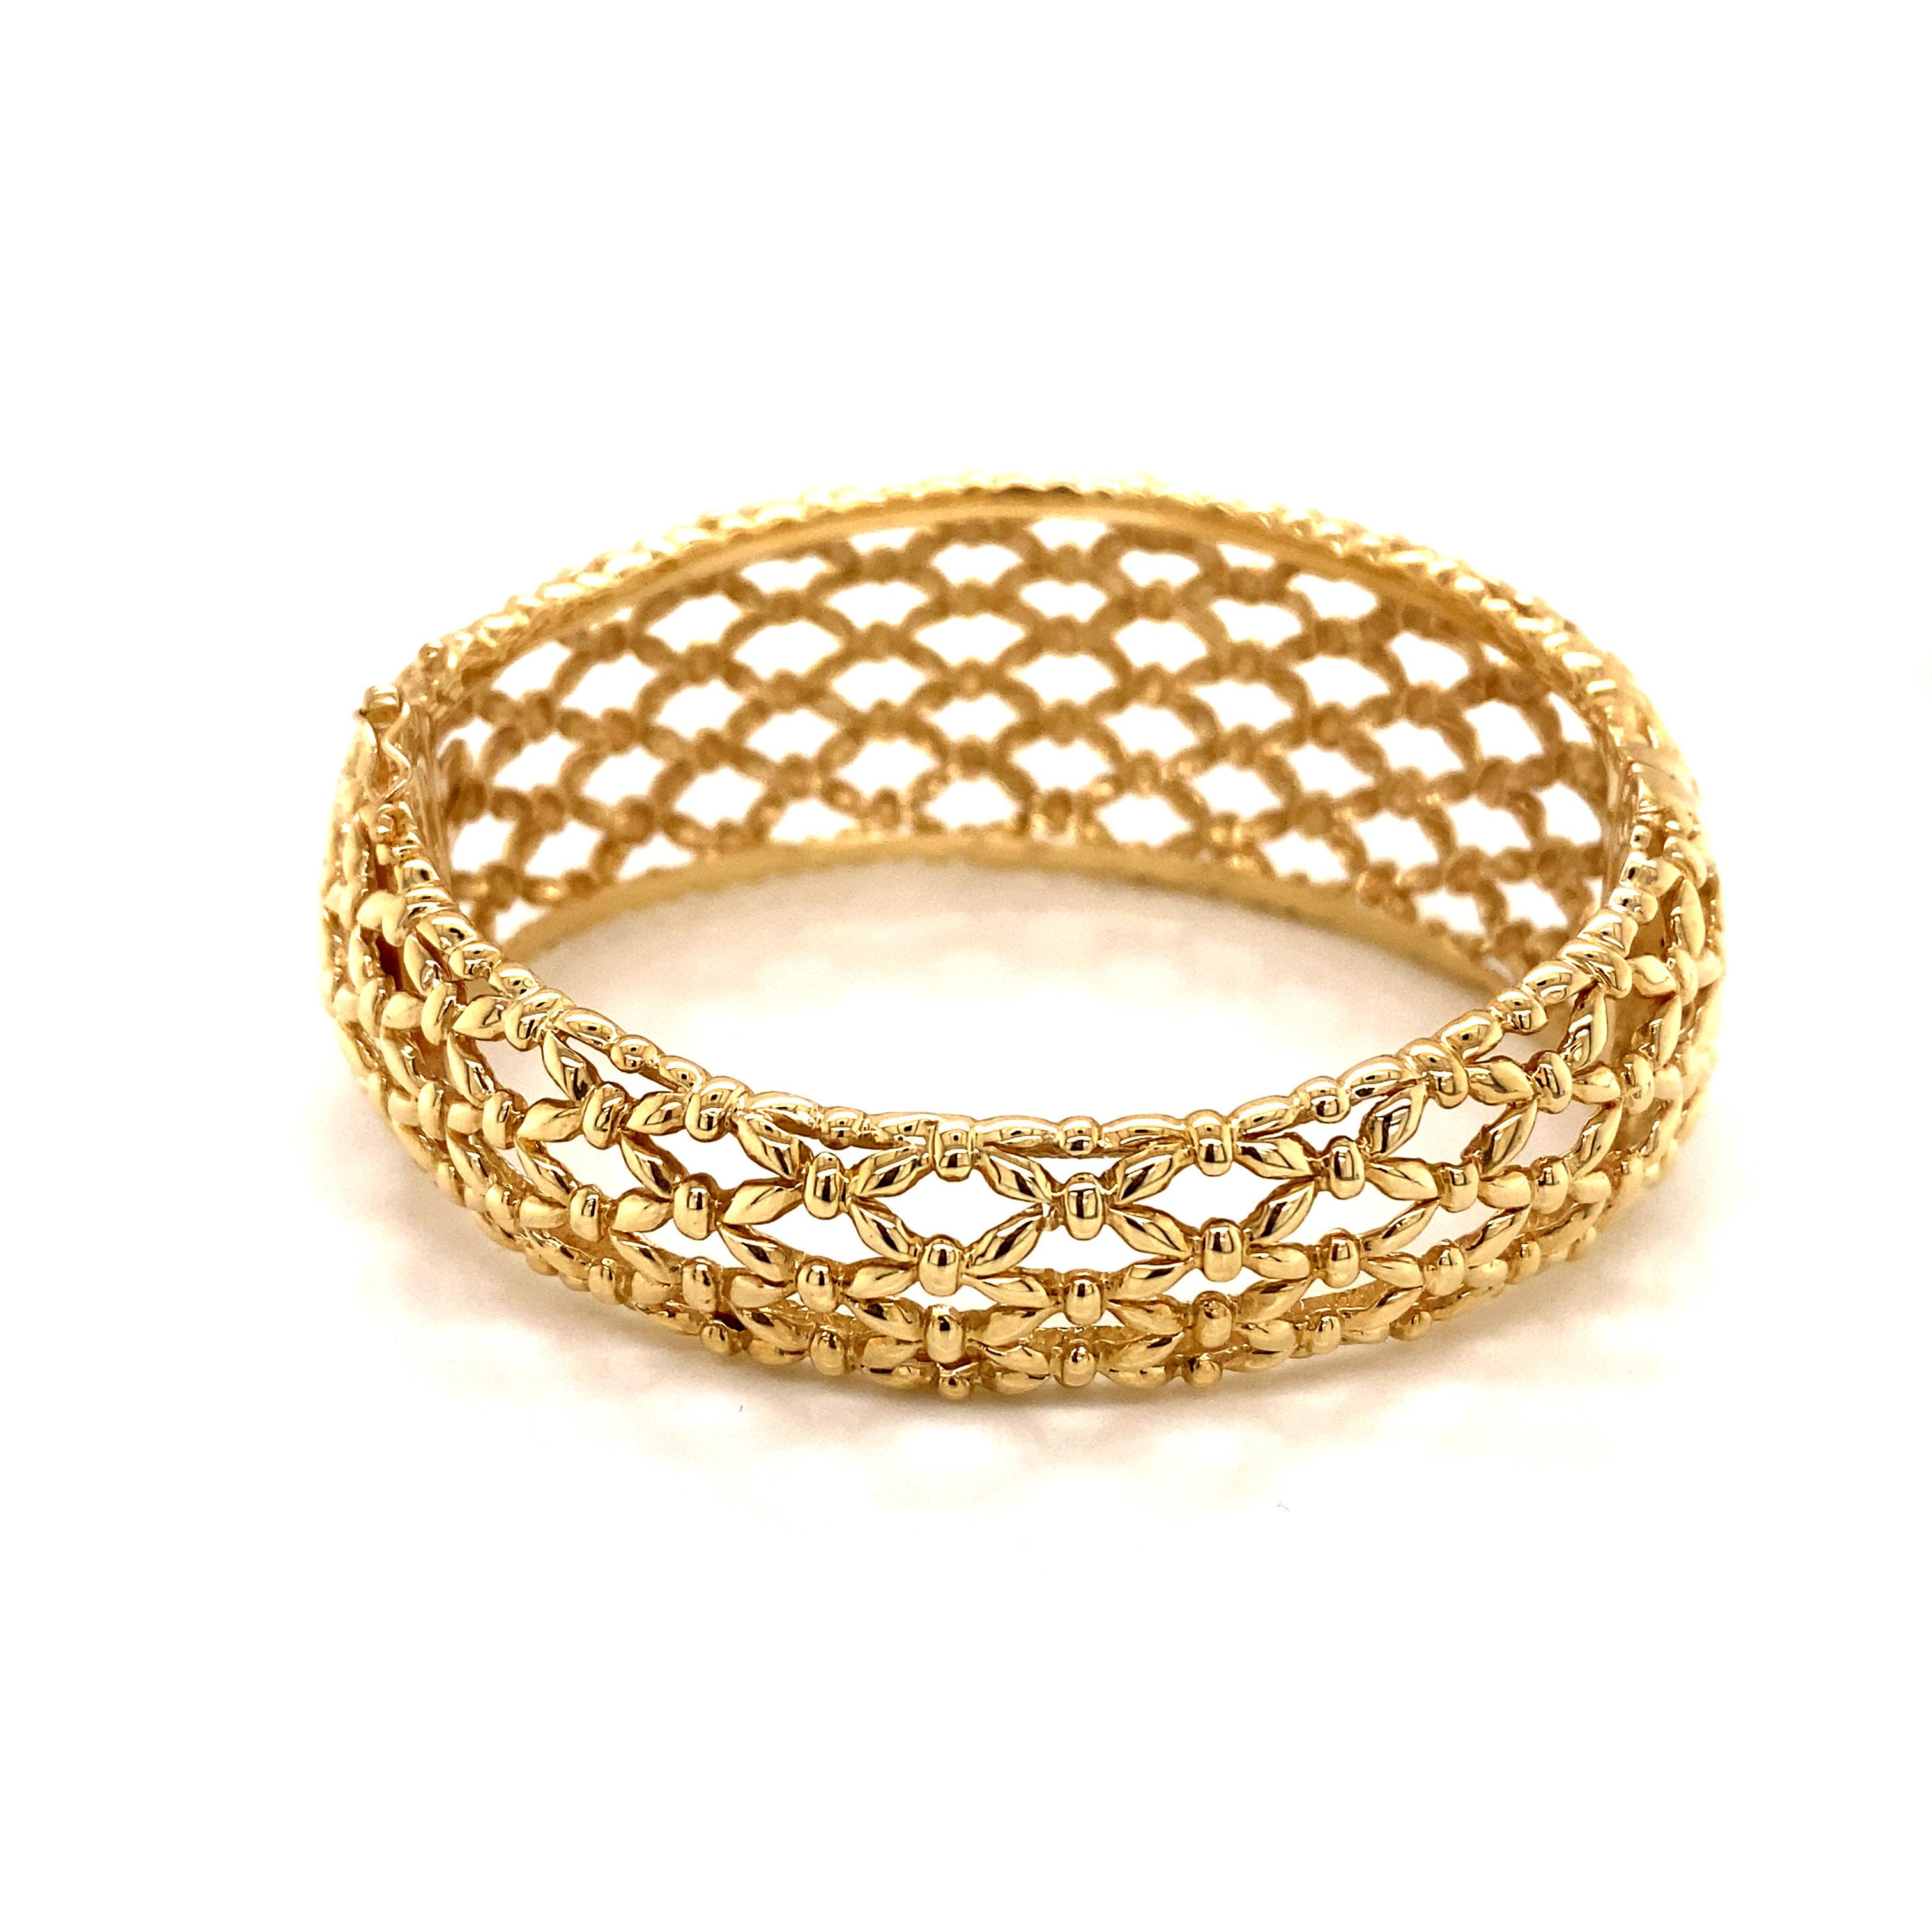 Vintage 1990's 14k Yellow Gold Basket Weave Design Bangle Bracelet Pour femmes en vente